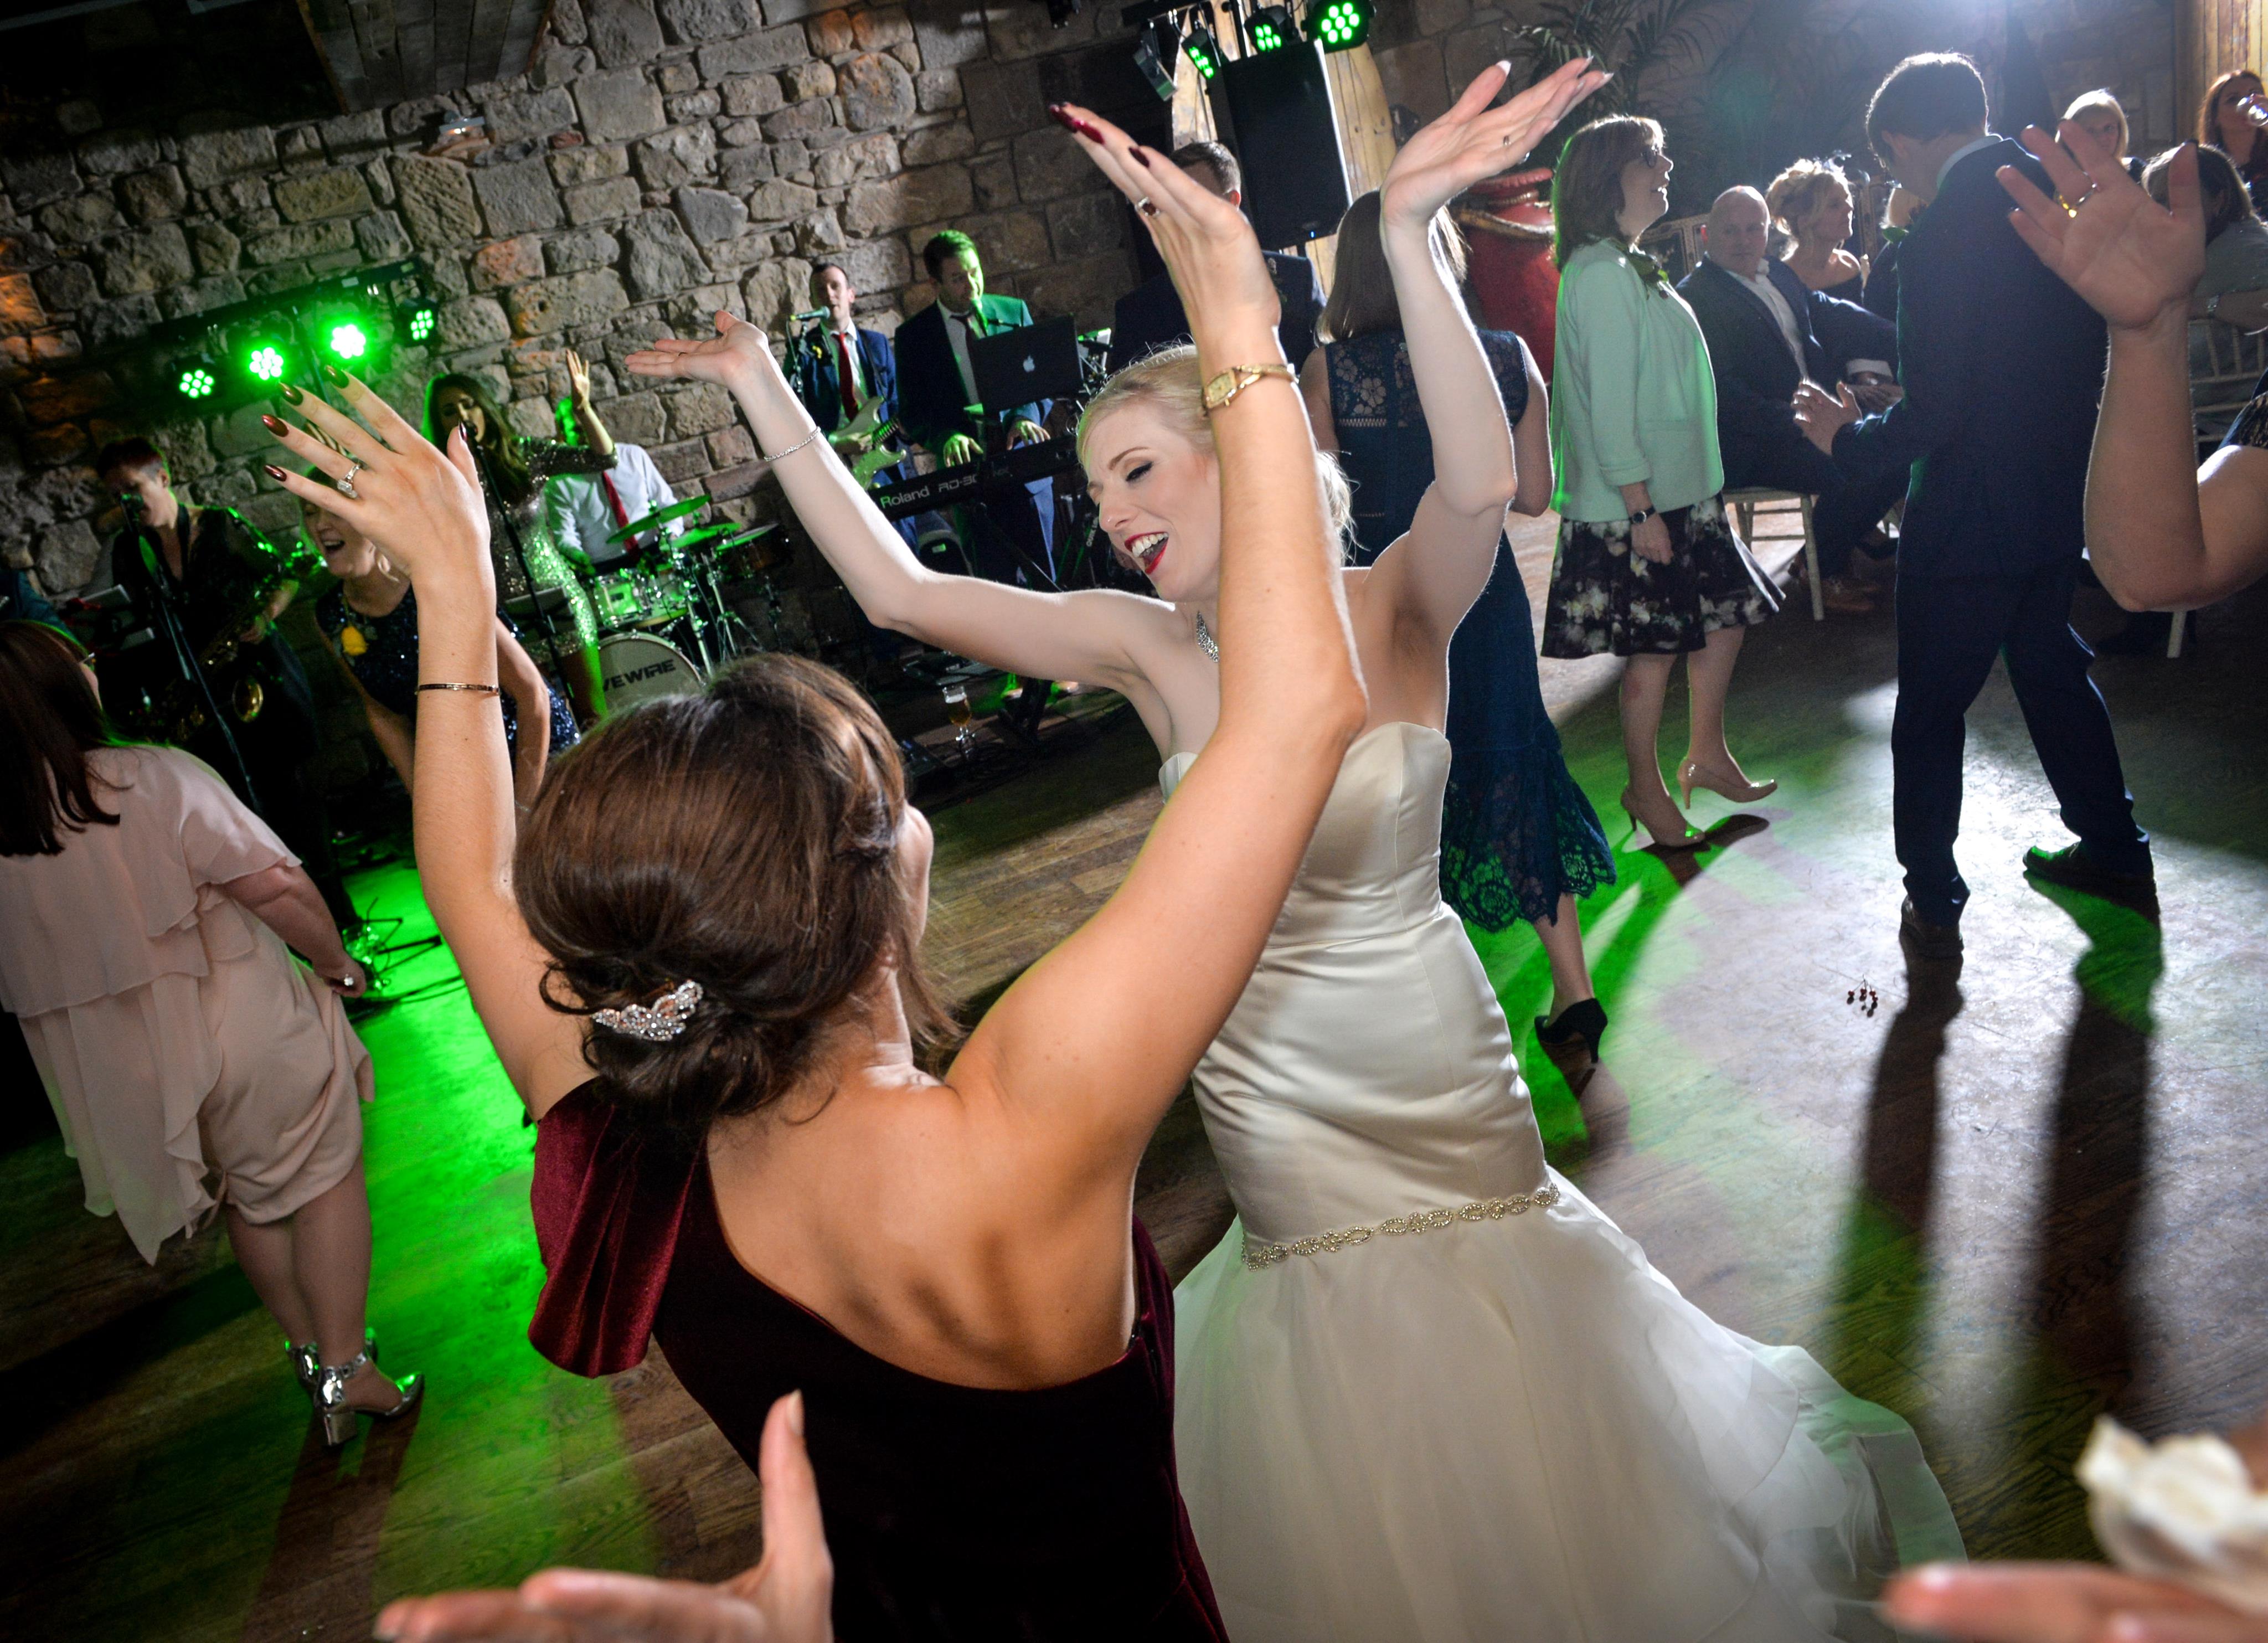 dancing-bride-wedding-band